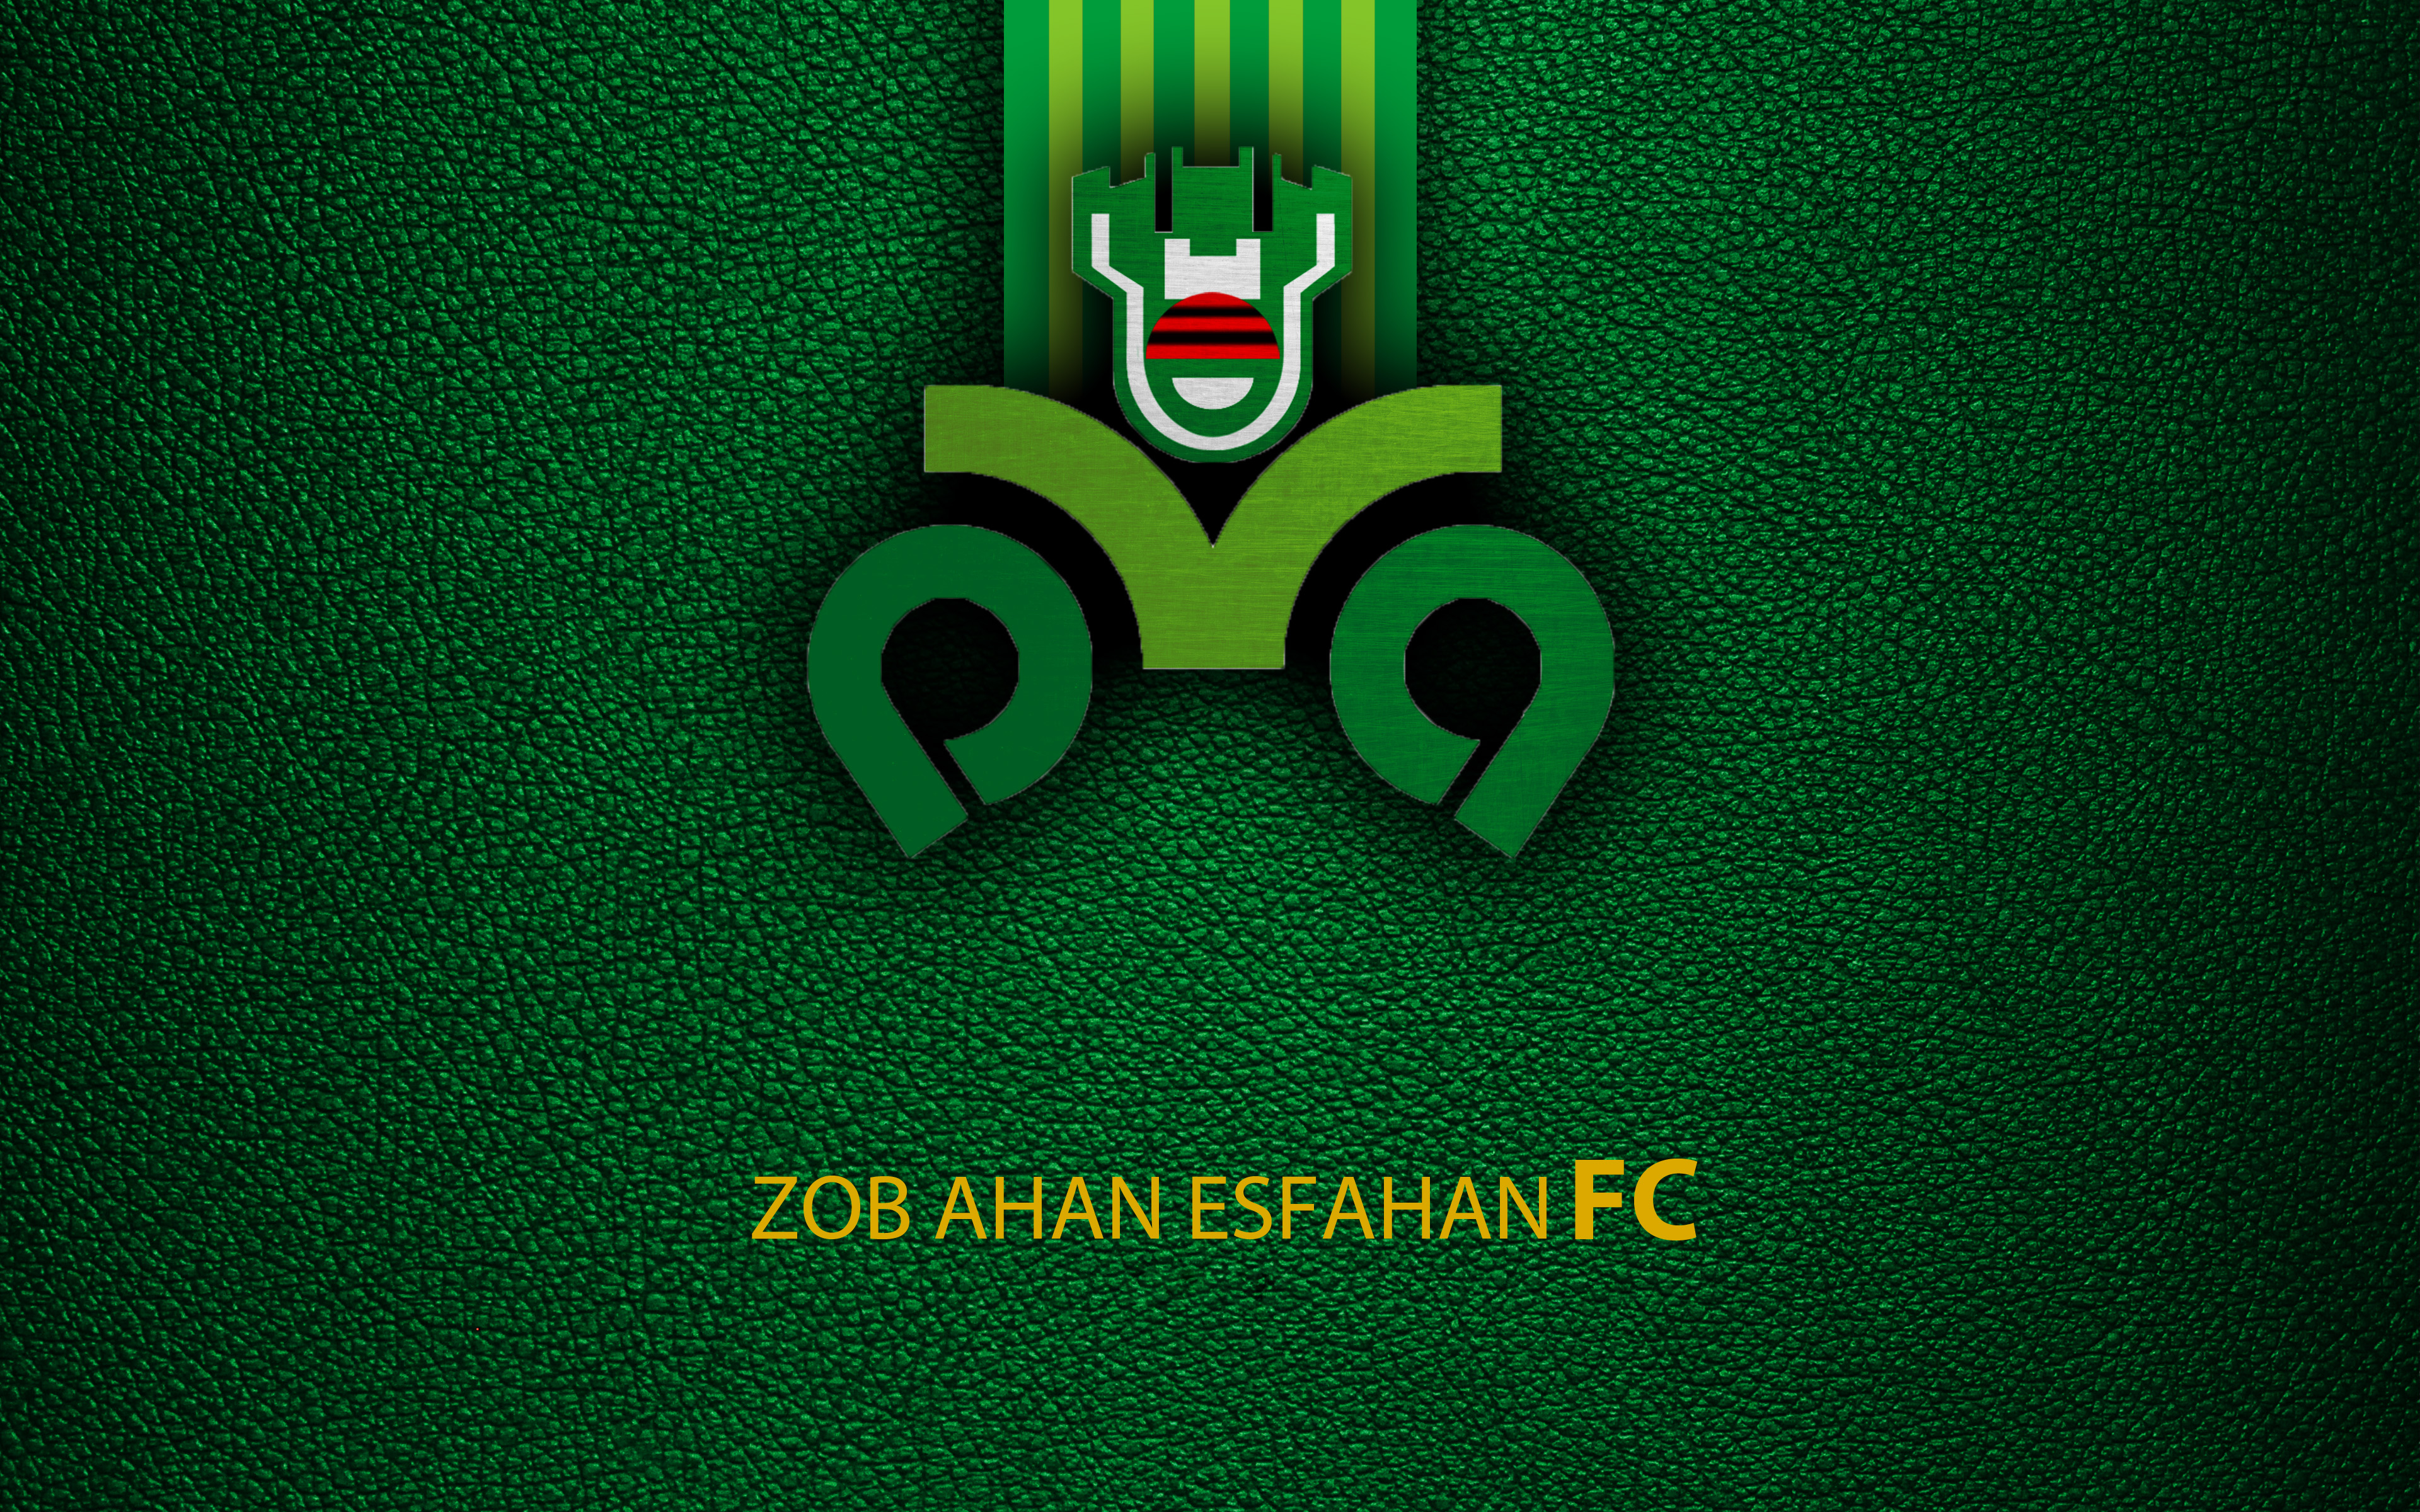 Зоб ахан. Зоб лого. ZOB Ahan Esfahan f.c. logo. Иран герб футбол.